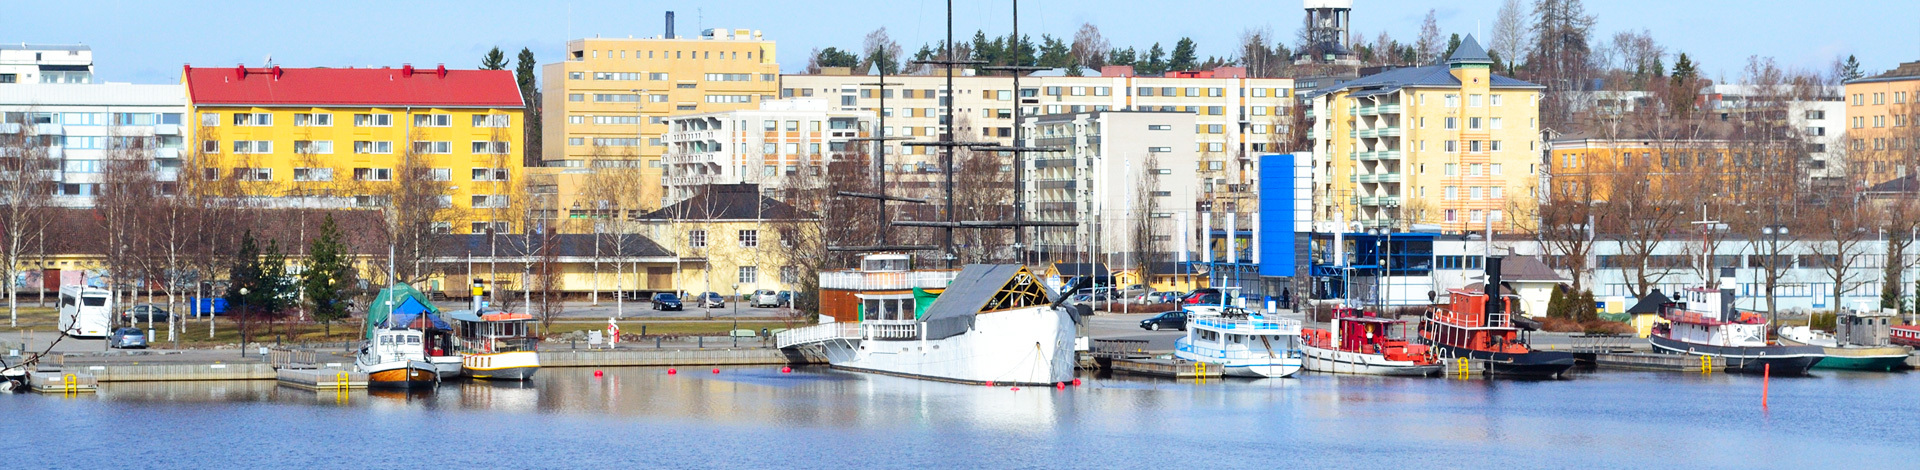 View of Mikkeli